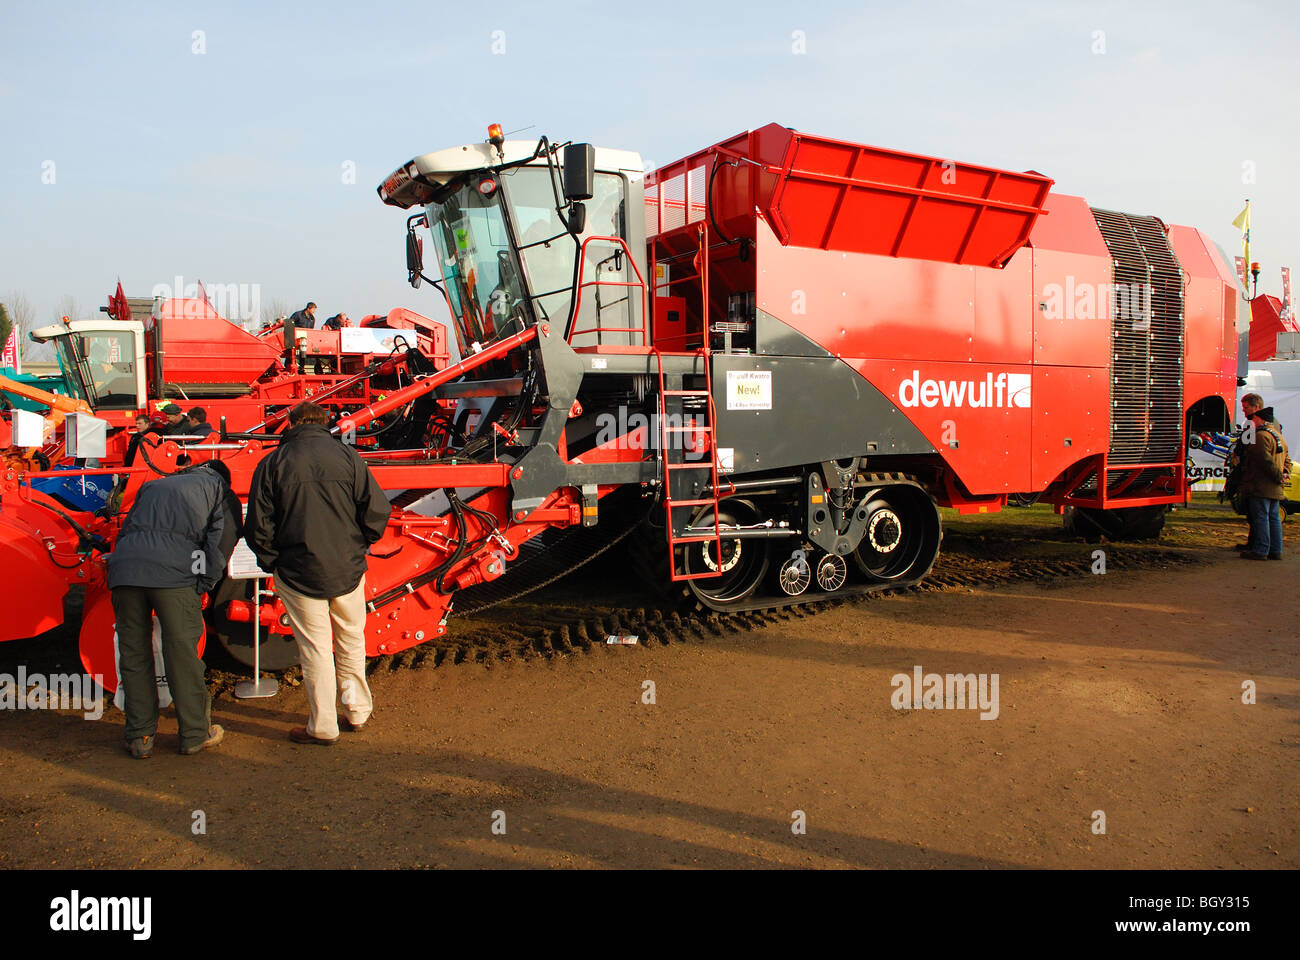 Dewulf Farming Machinery . Stock Photo